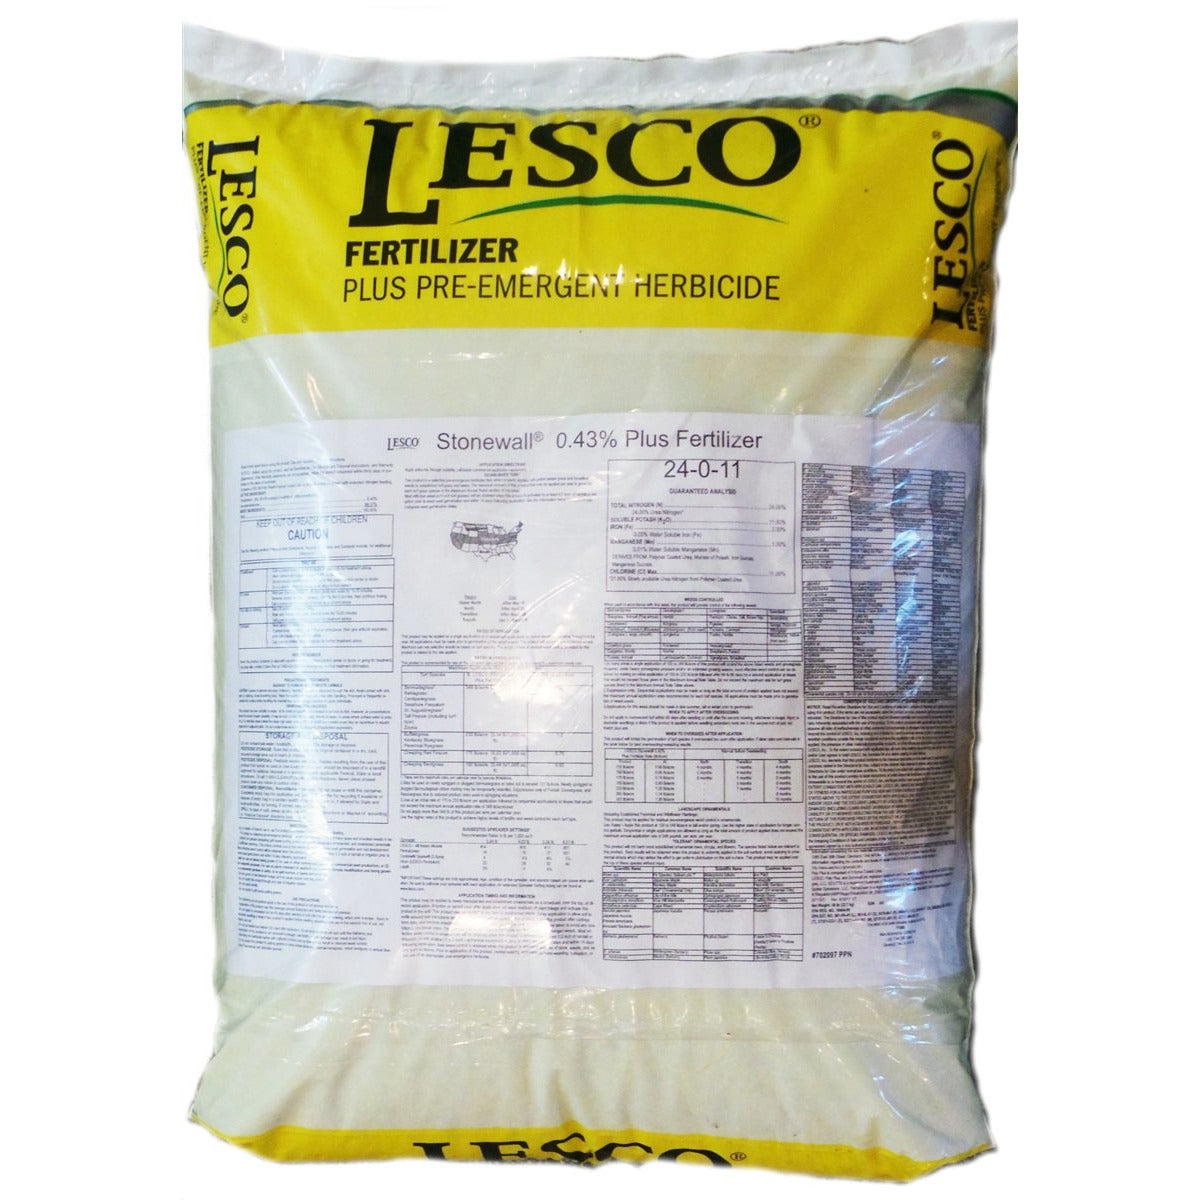 Lesco Stonewall PreEmergent Herbicide Plus 24011 Fertilizer 50 lbs